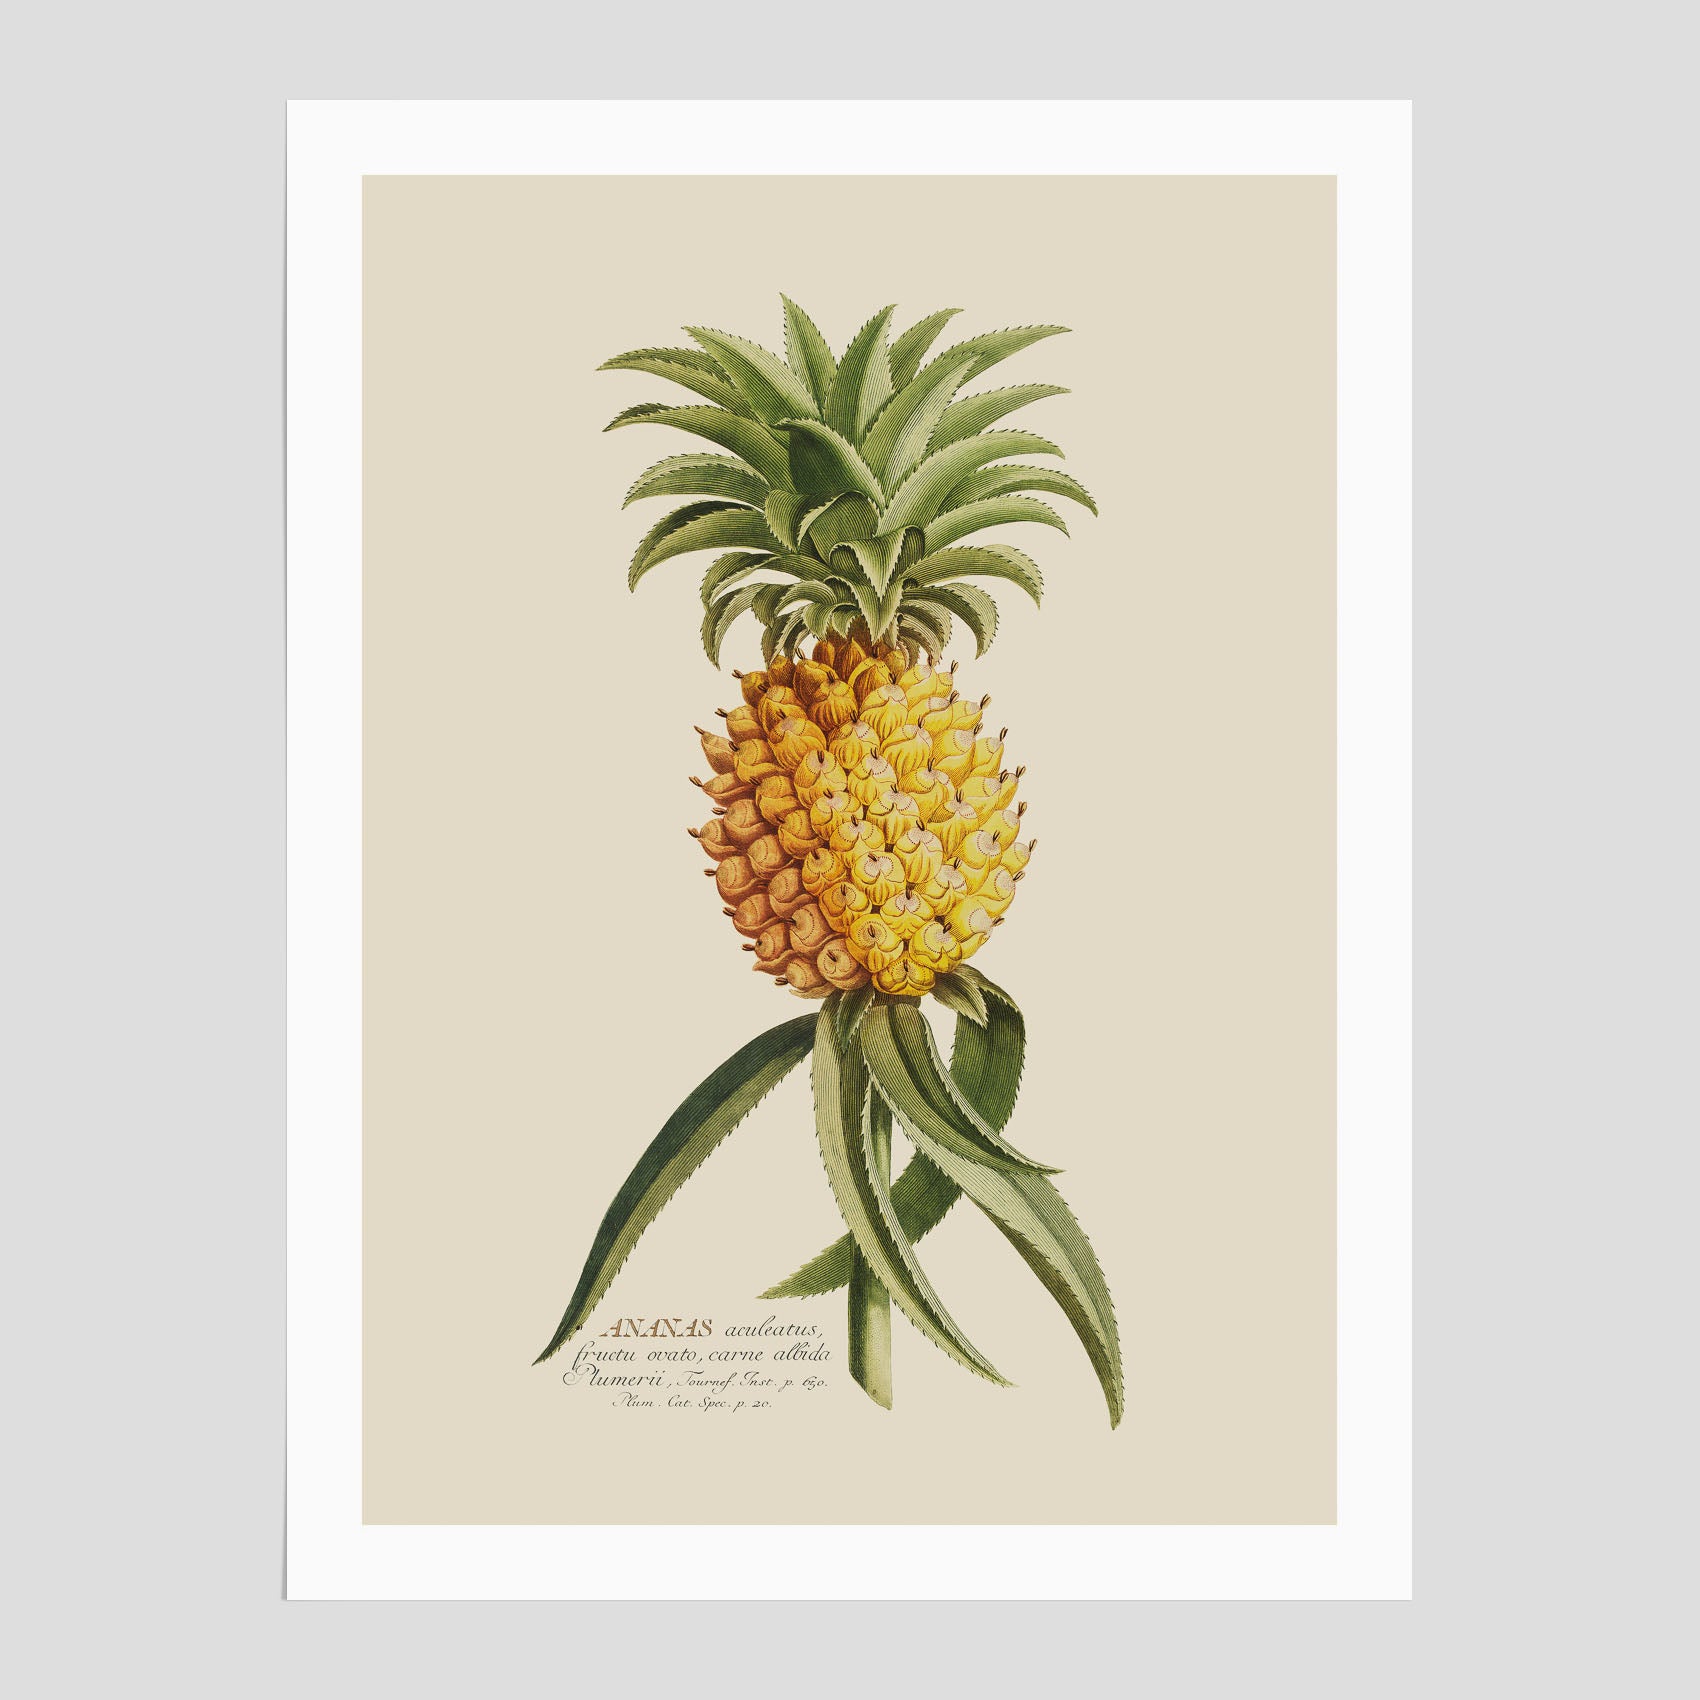 Vintagepostern med en ananasillustration